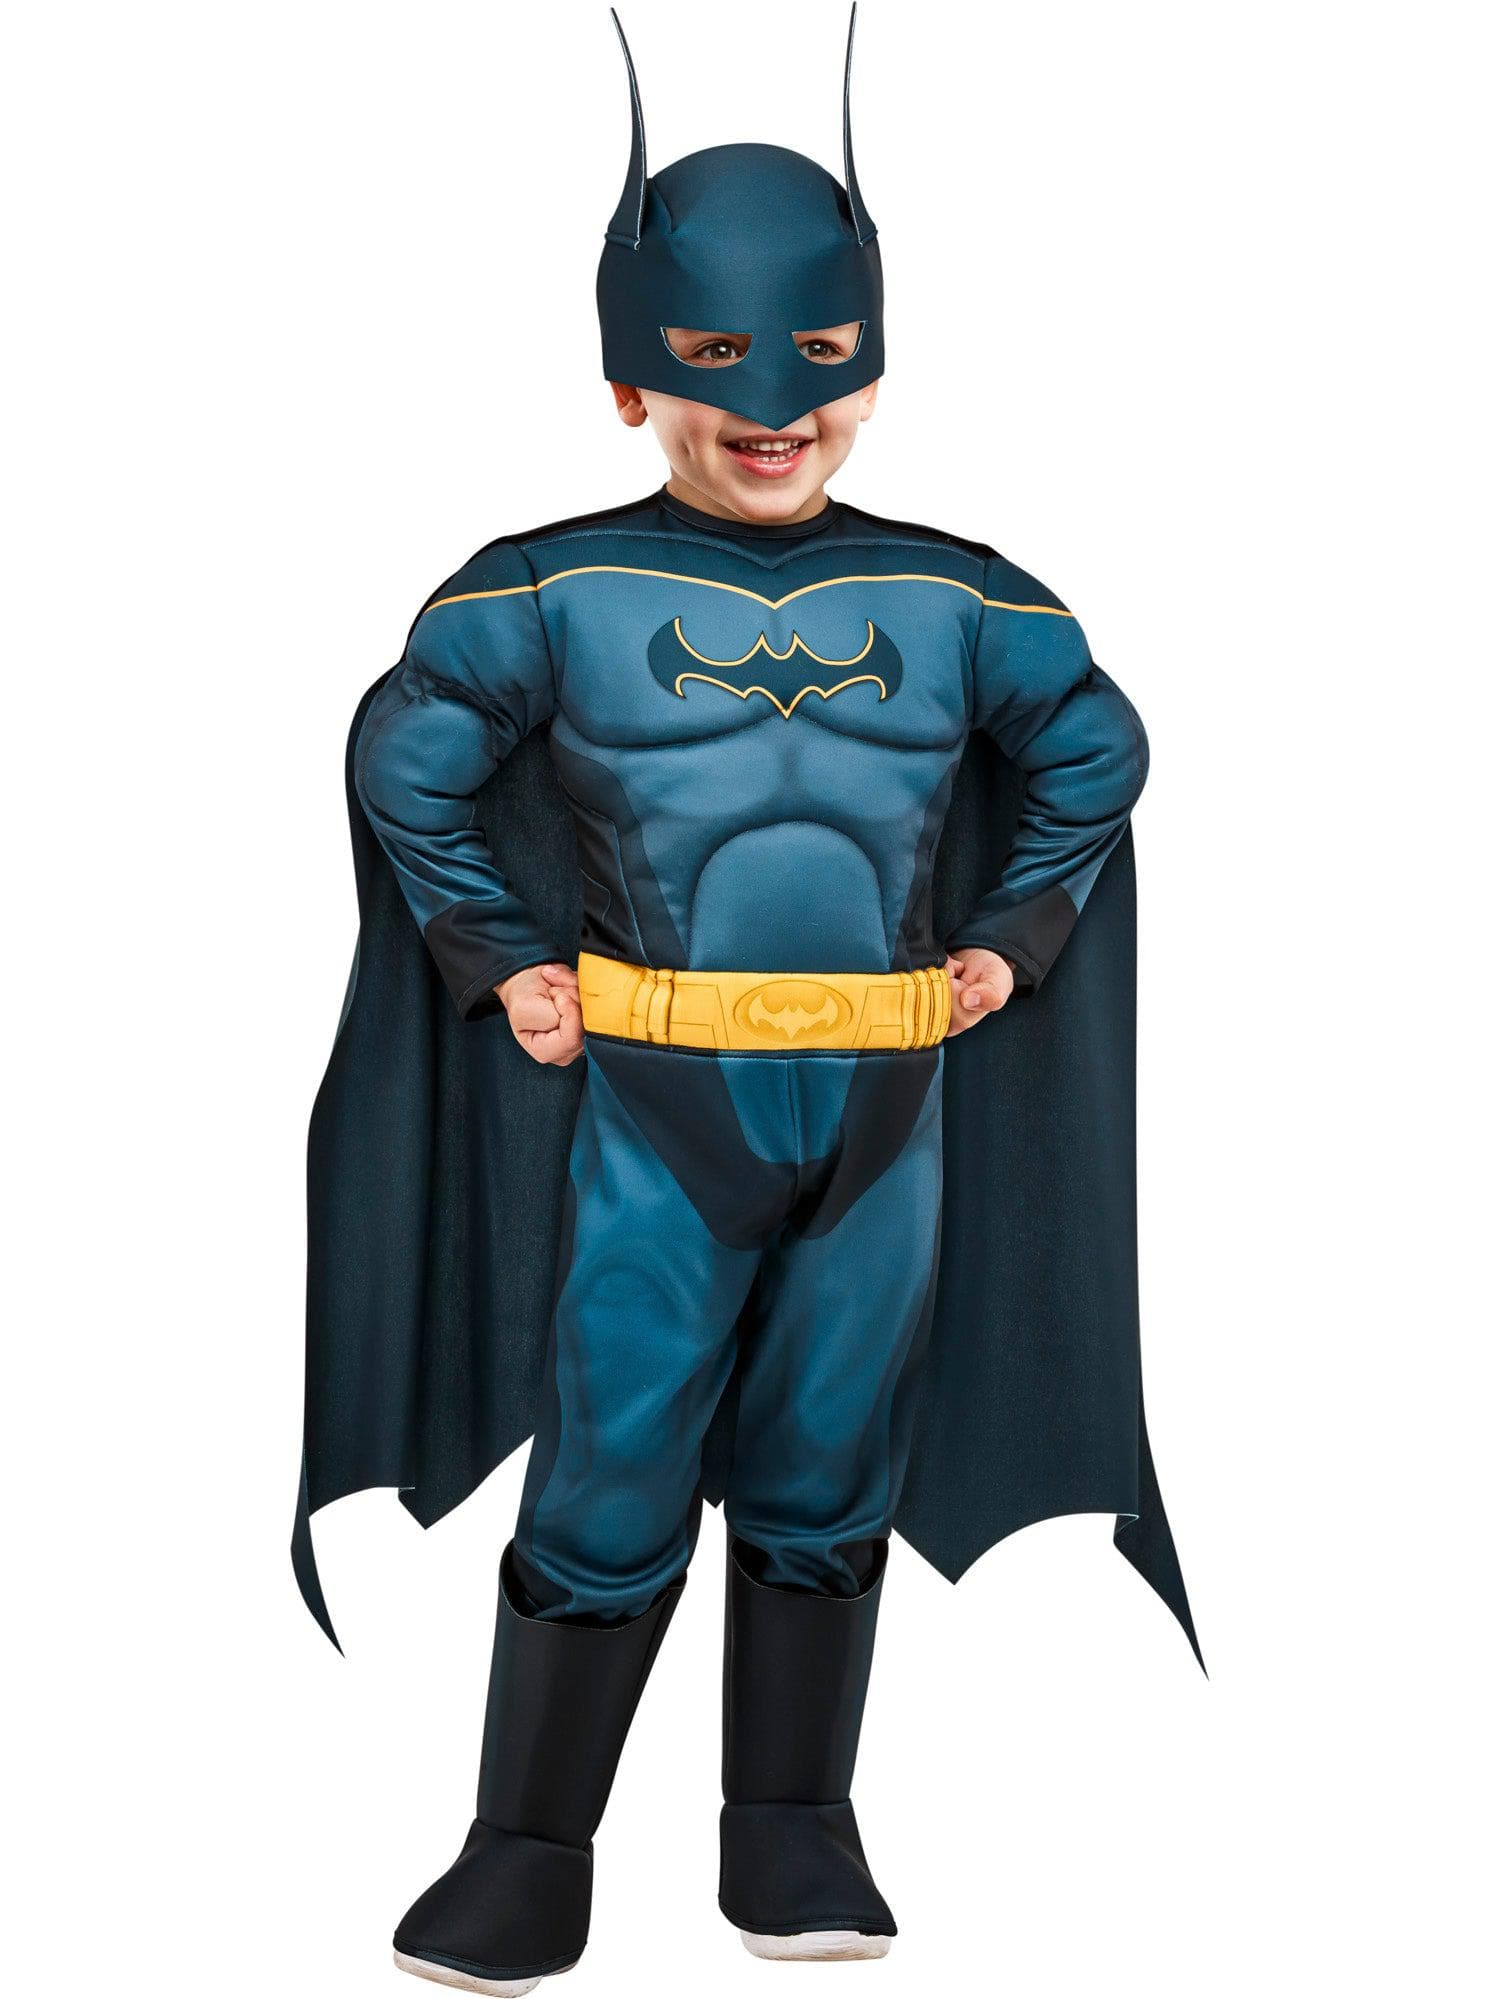 DC League of Super Pets Batman Toddler Costume - costumes.com